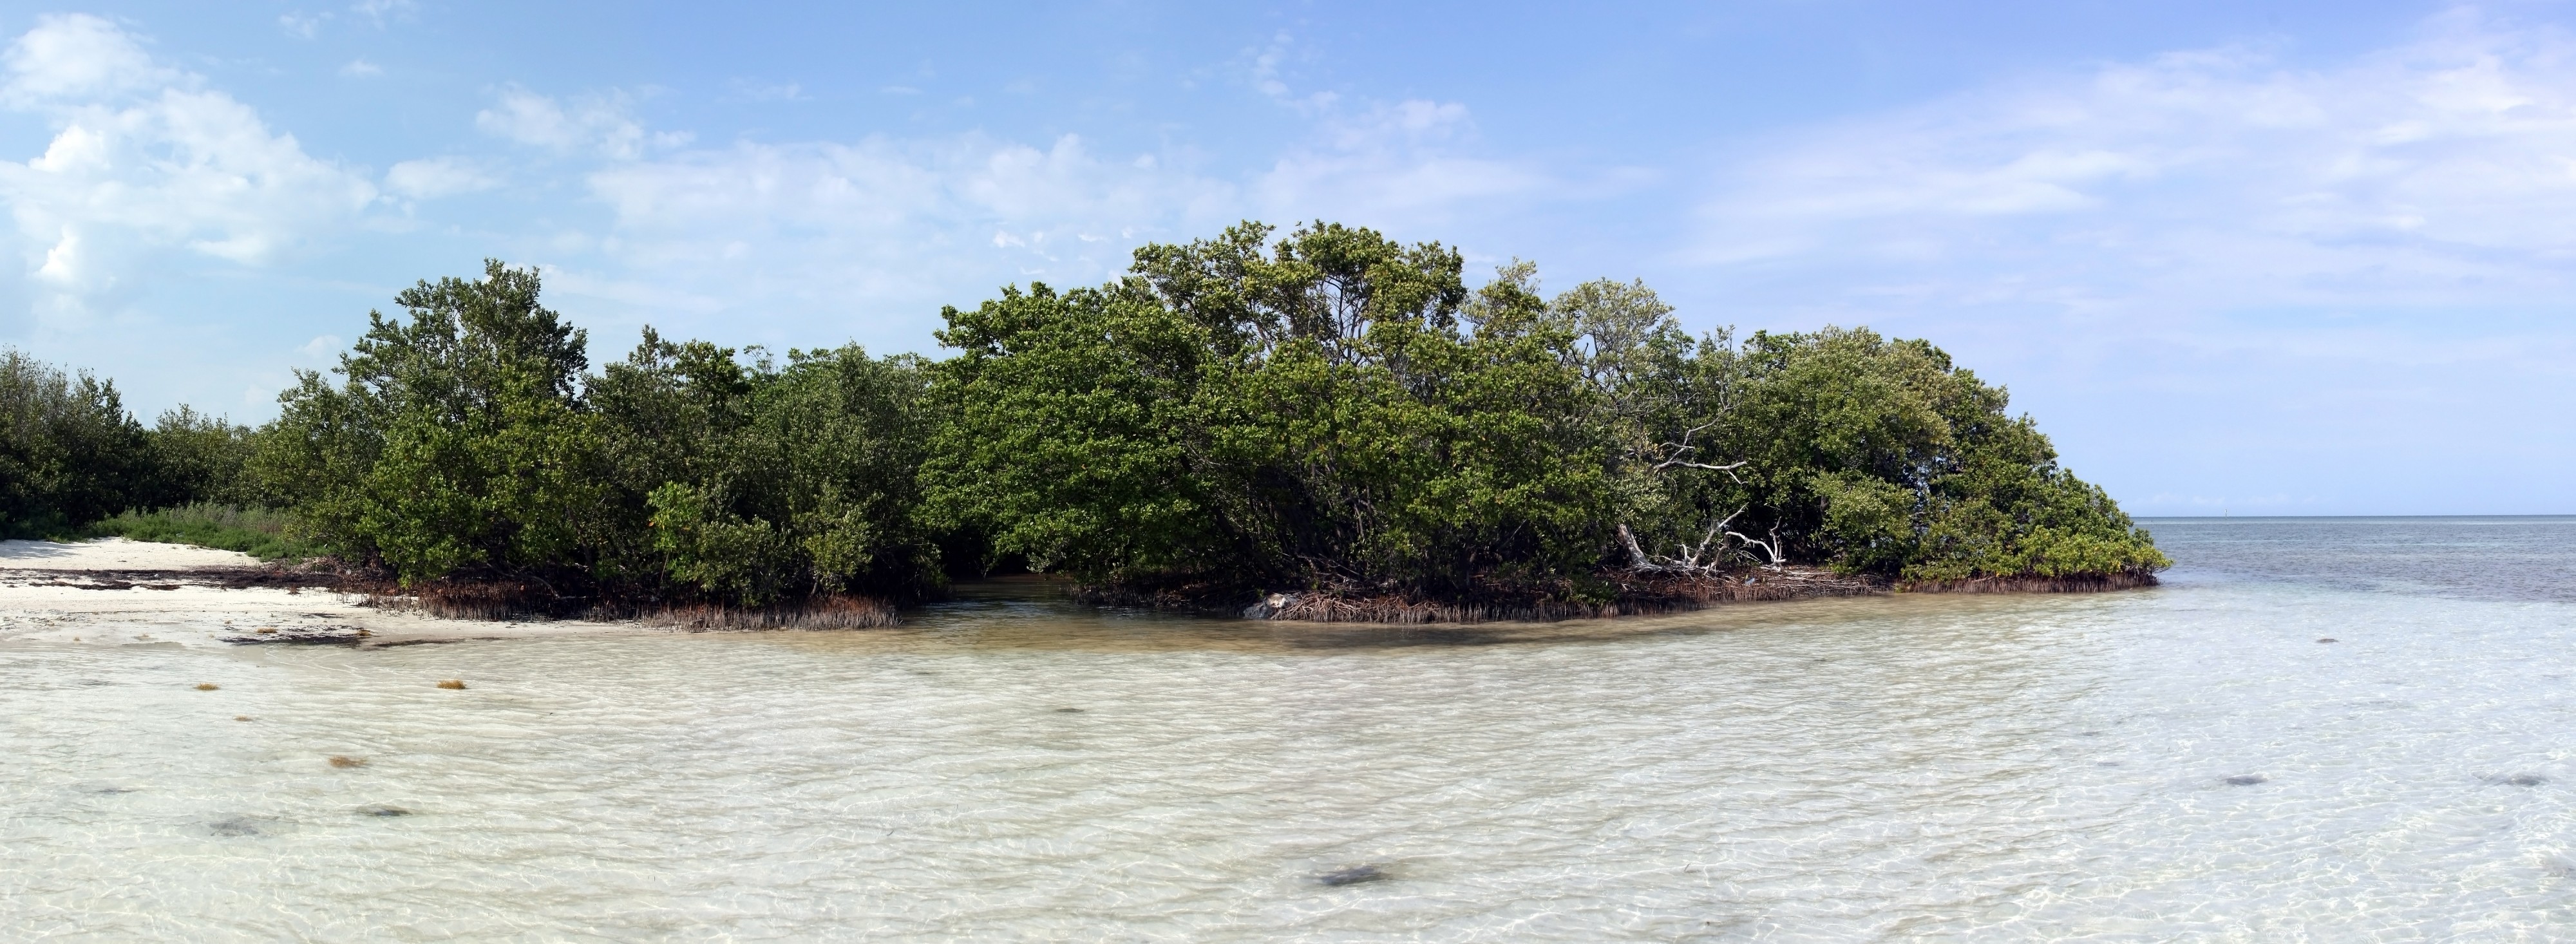 Mangrove forest Islamorada FL